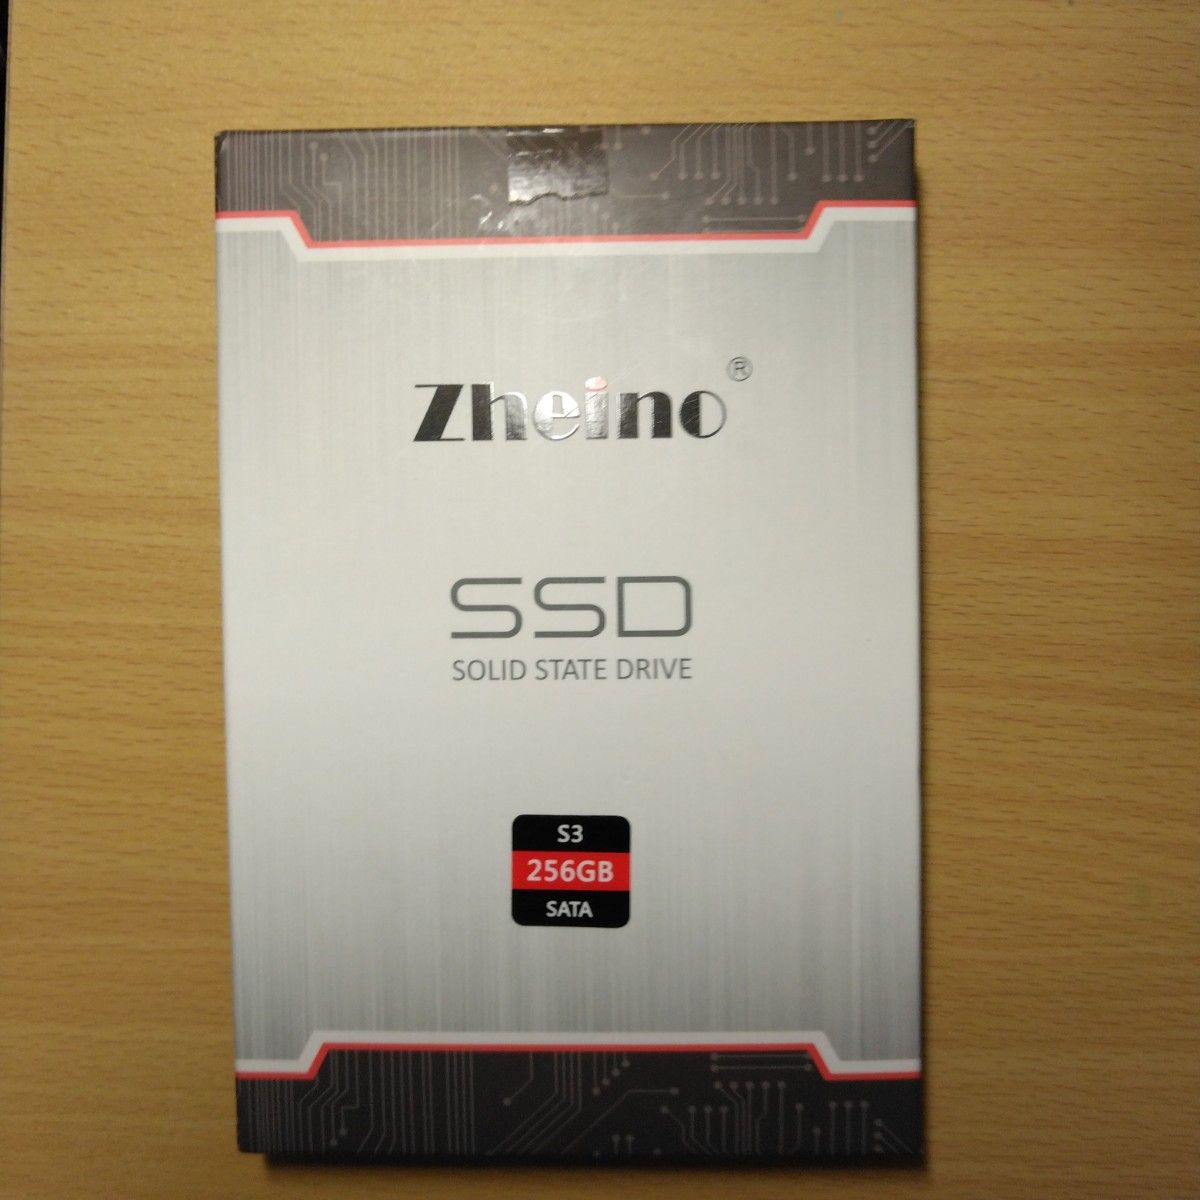 Zheino SSD S3 256GB SATA  